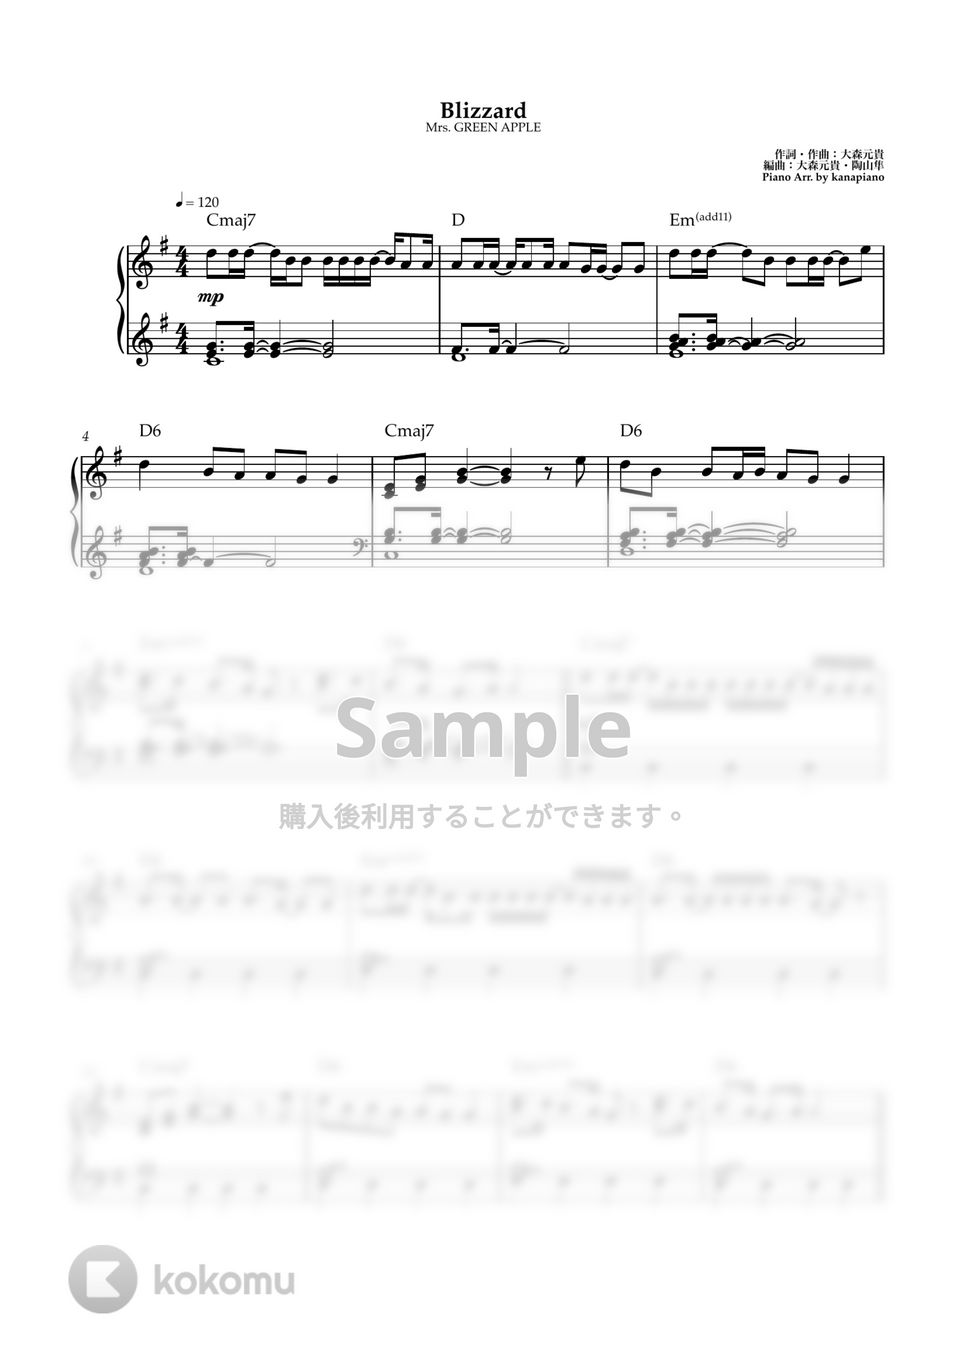 Mrs. GREEN APPLE - Blizzard(中級) (ピアノソロ/ANTENNA) by kanapiano